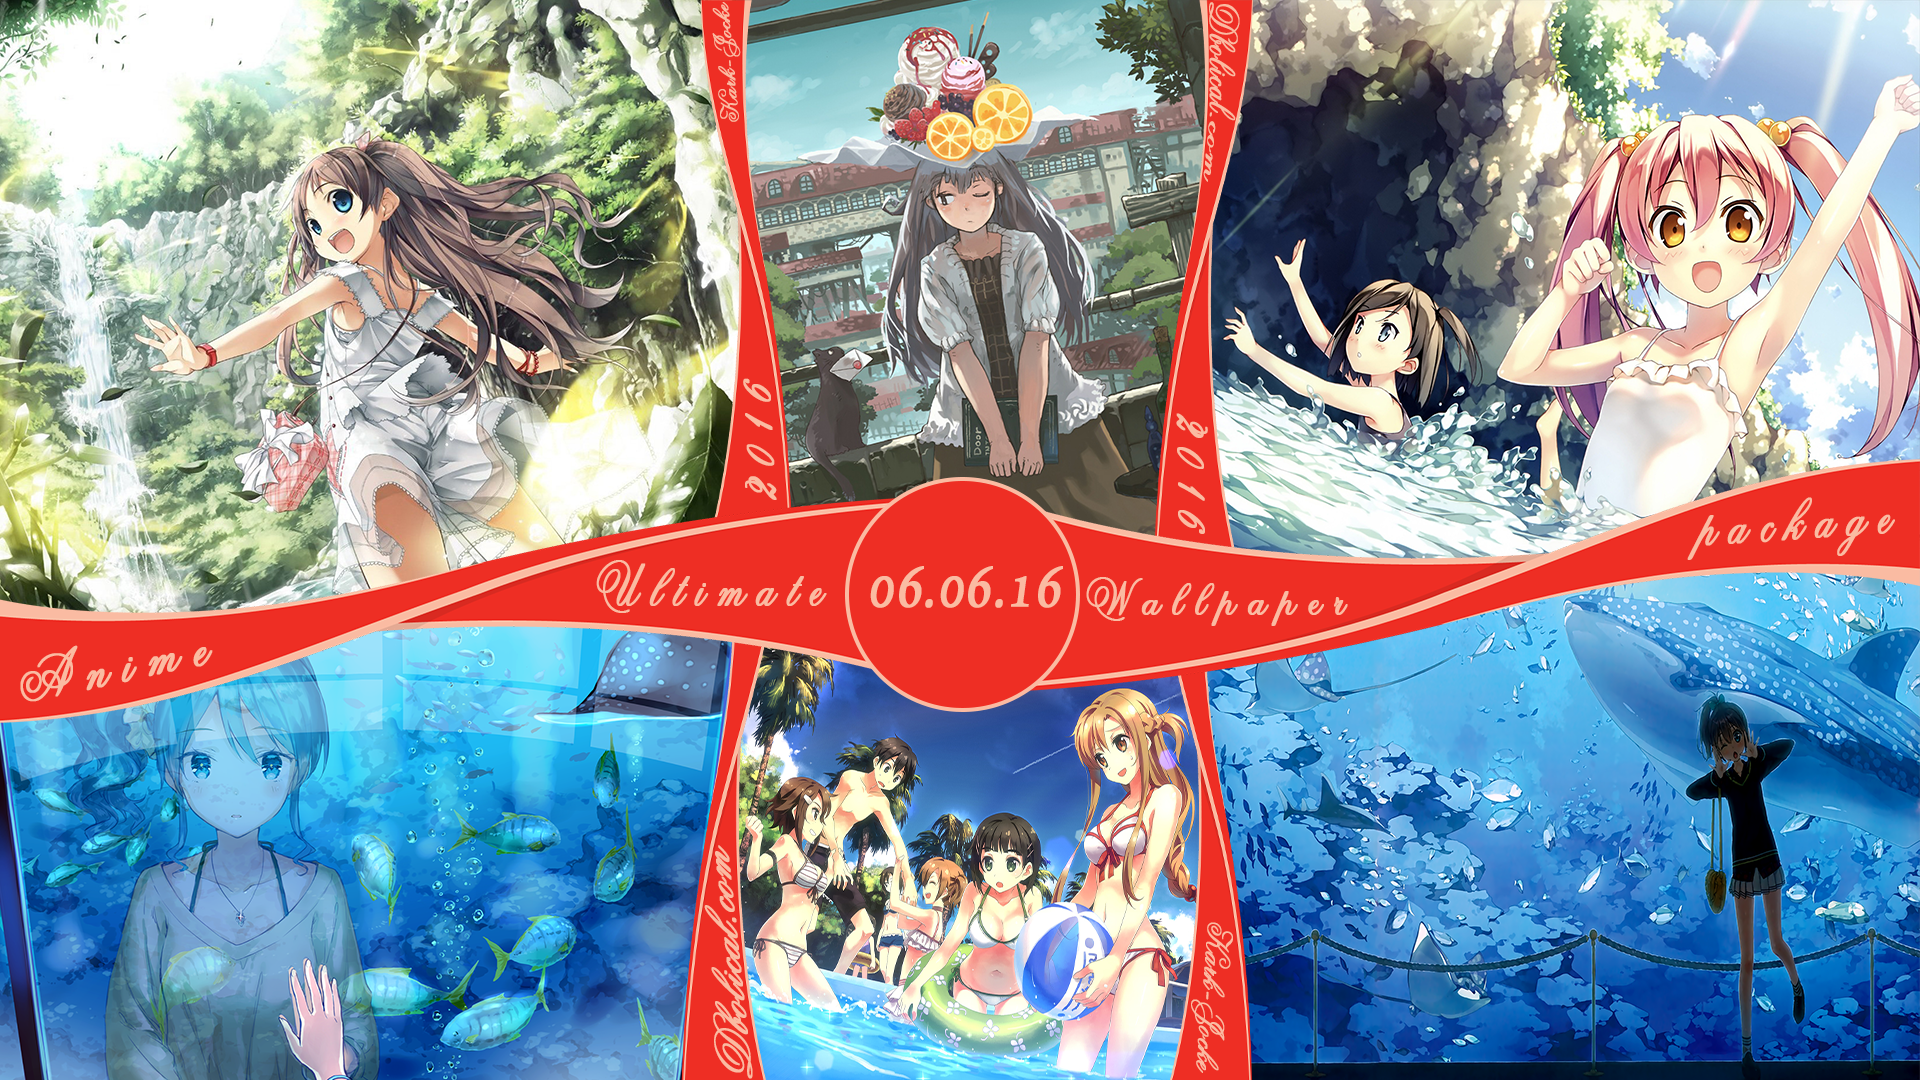 Old Anime Wallpaper's (Full-HD) - 02.02.16 file - Mod DB